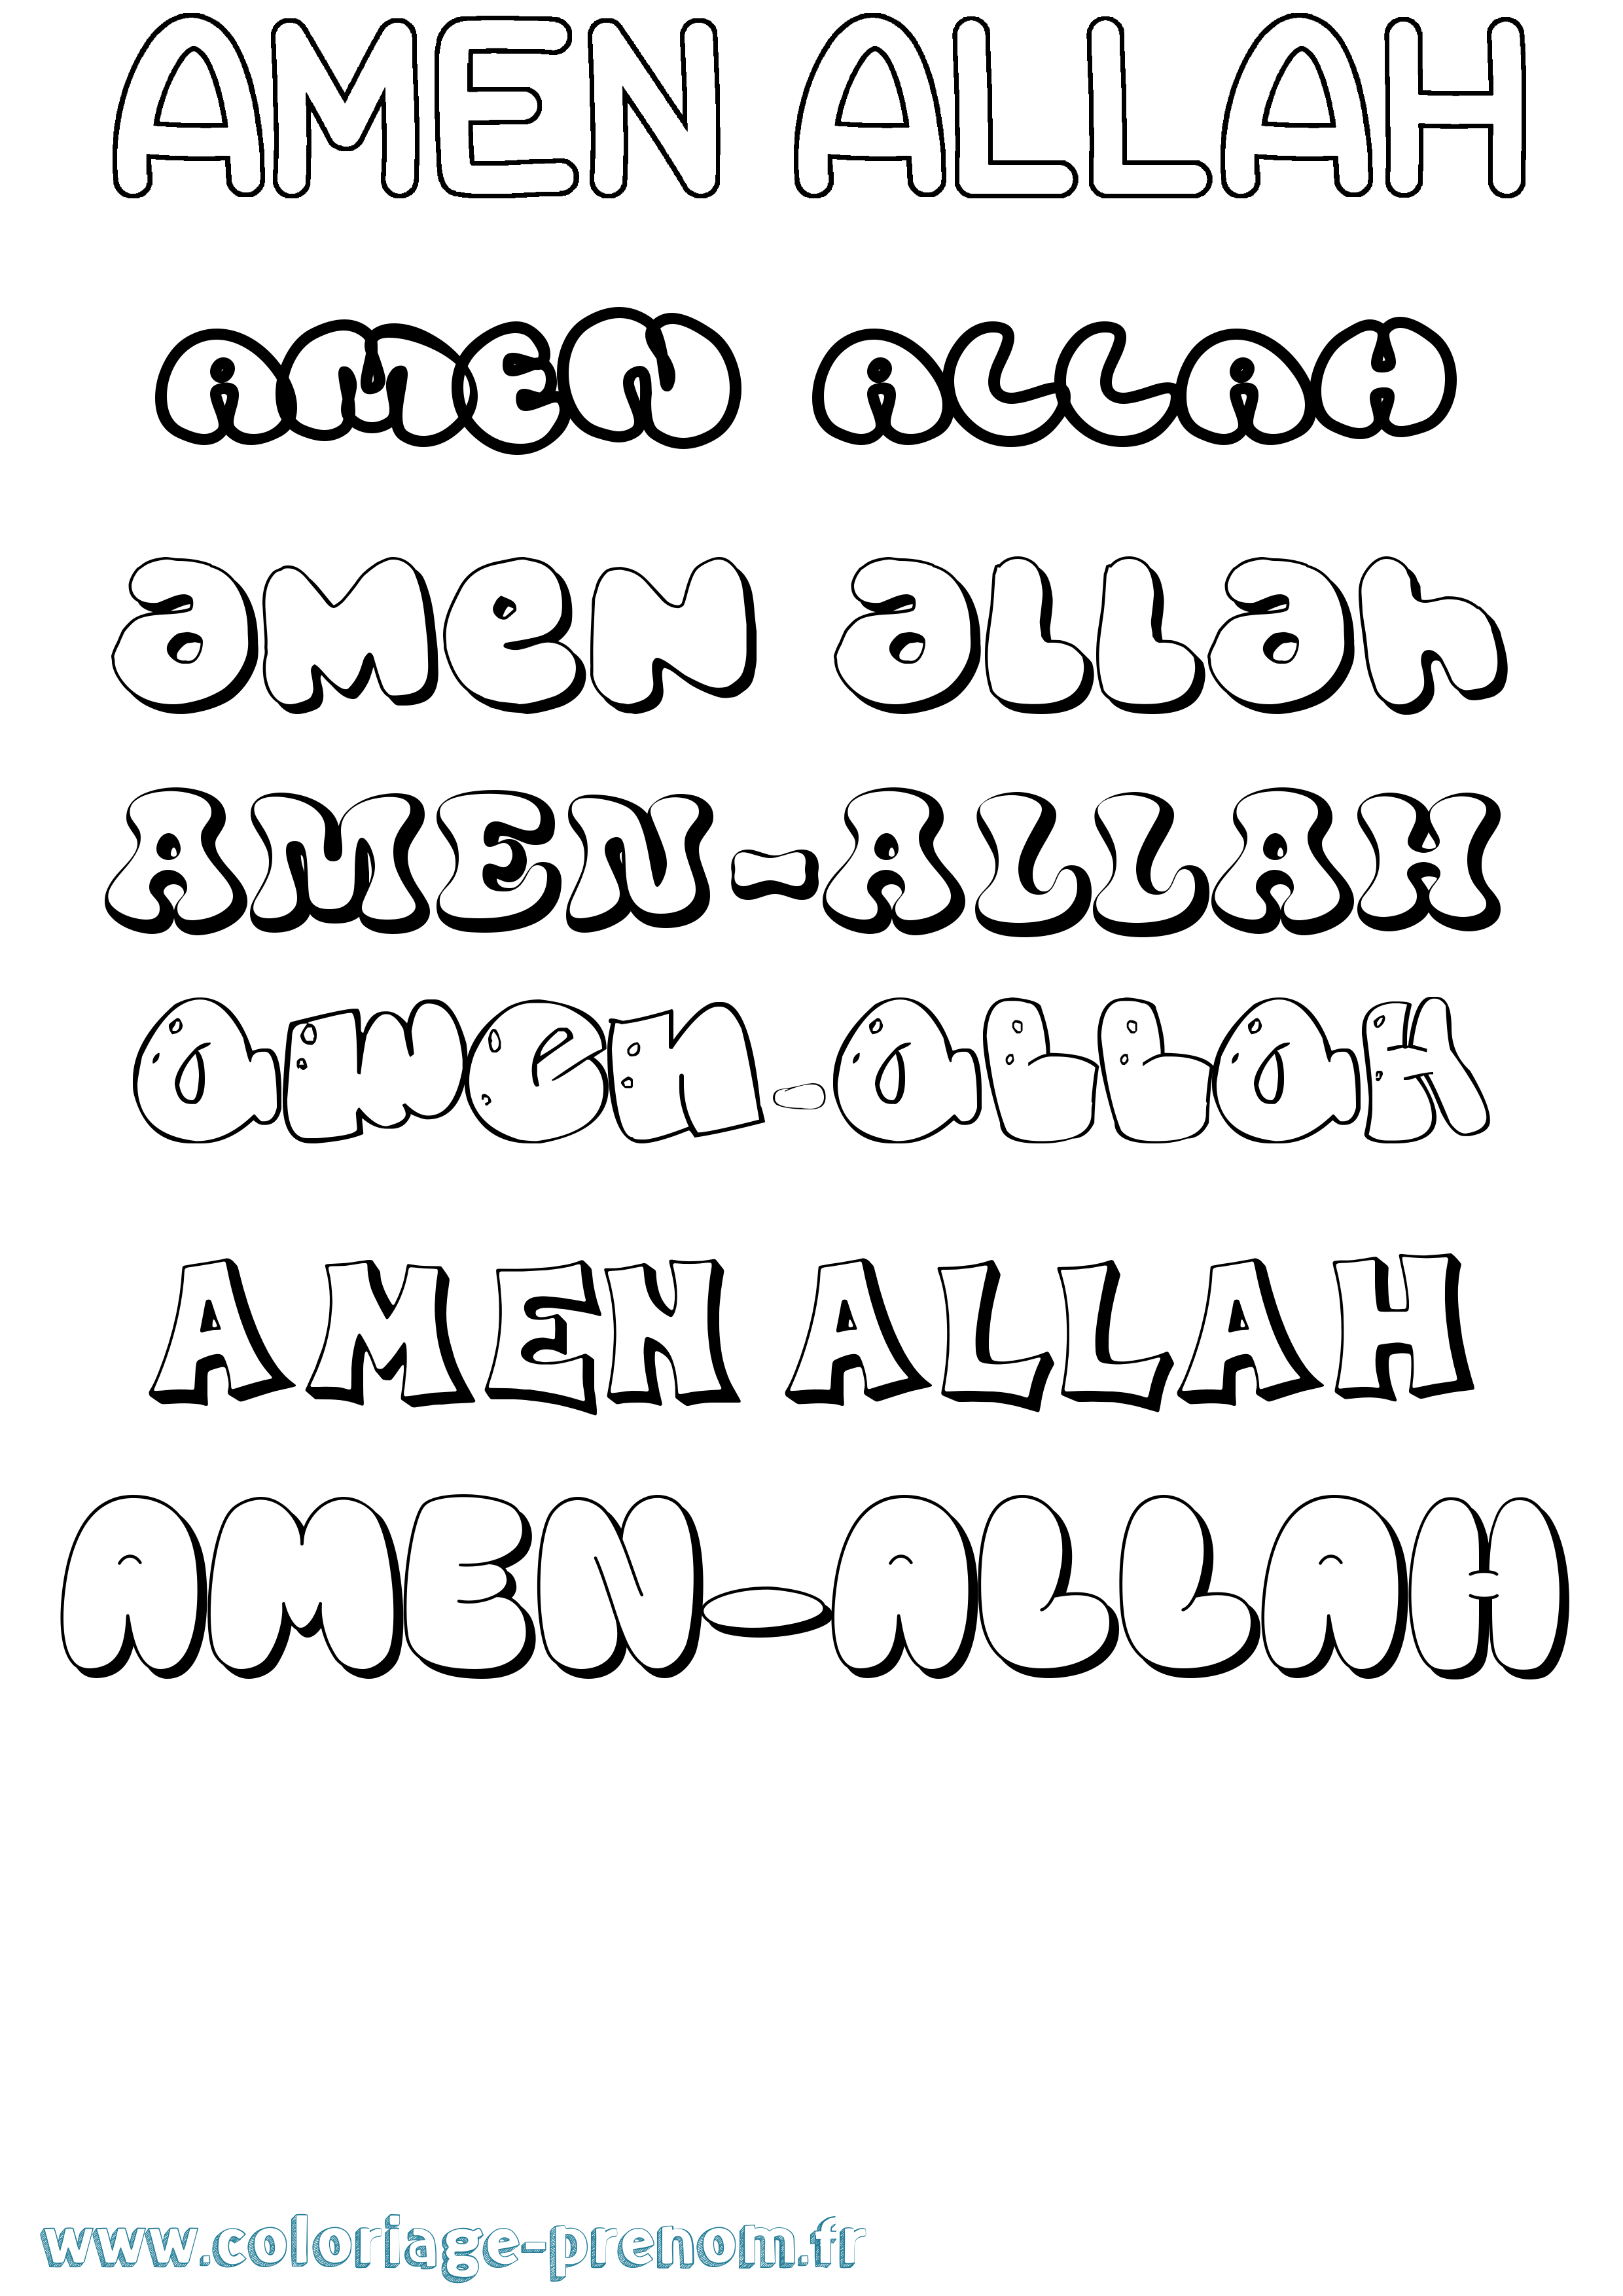 Coloriage prénom Amen-Allah Bubble